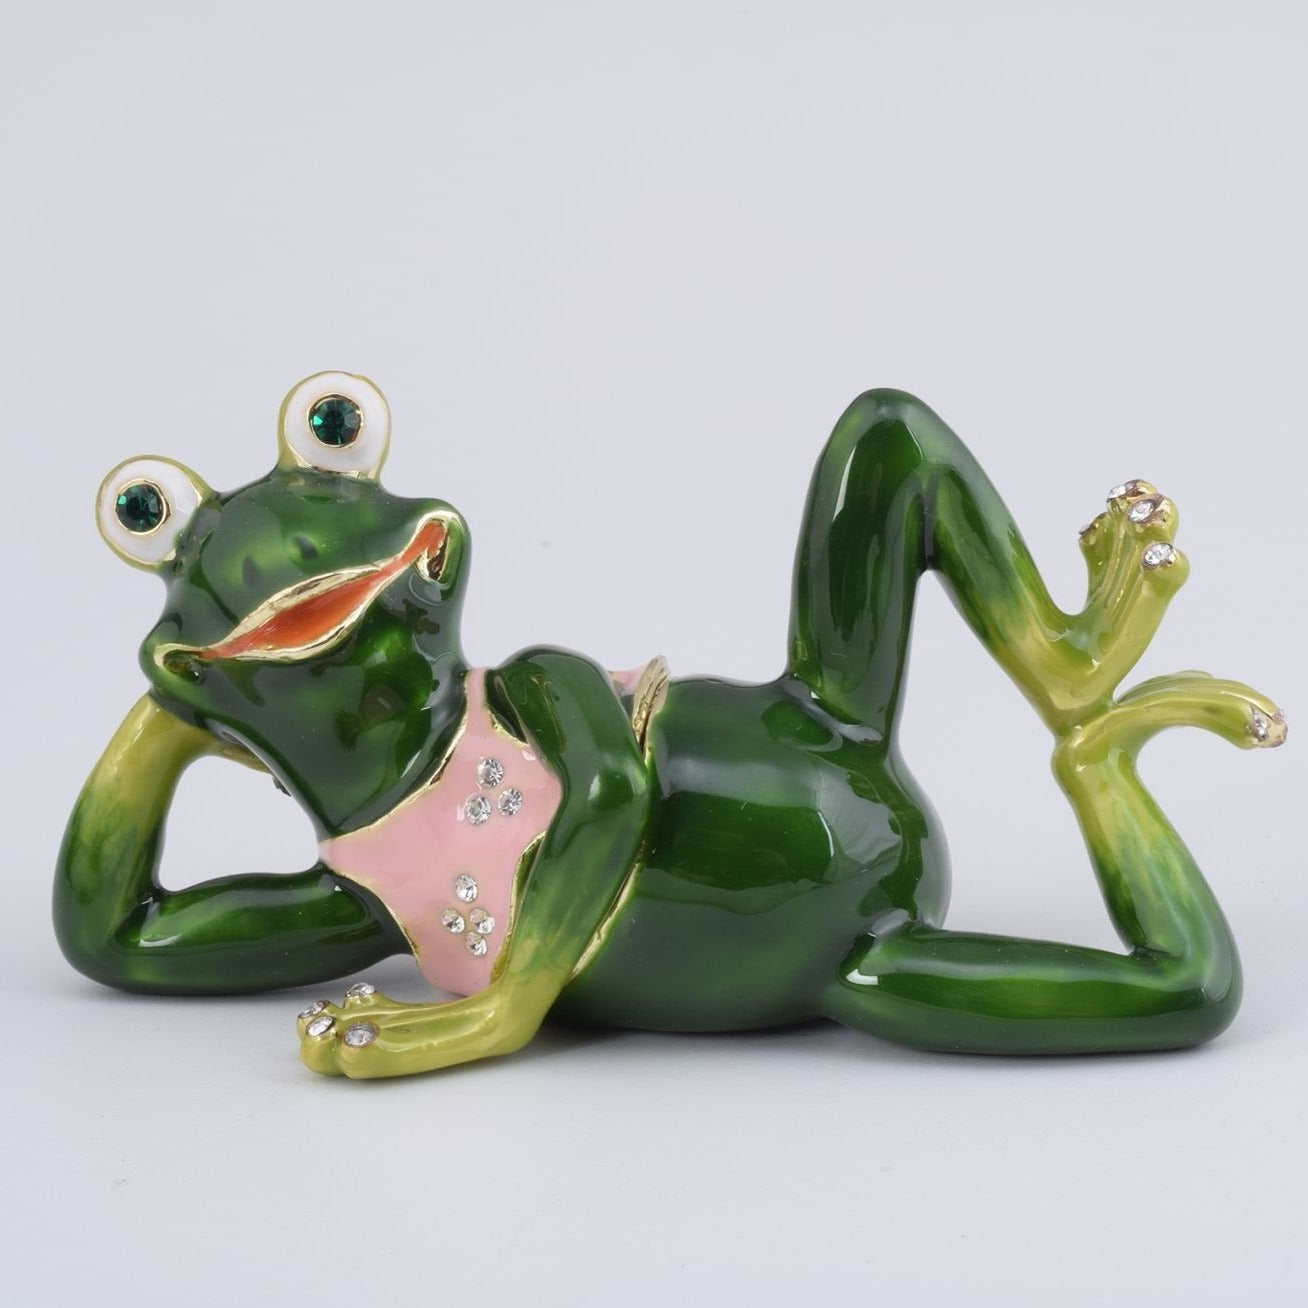 Keren Kopal Gymnastic Frog with a Pink Shirt  62.62